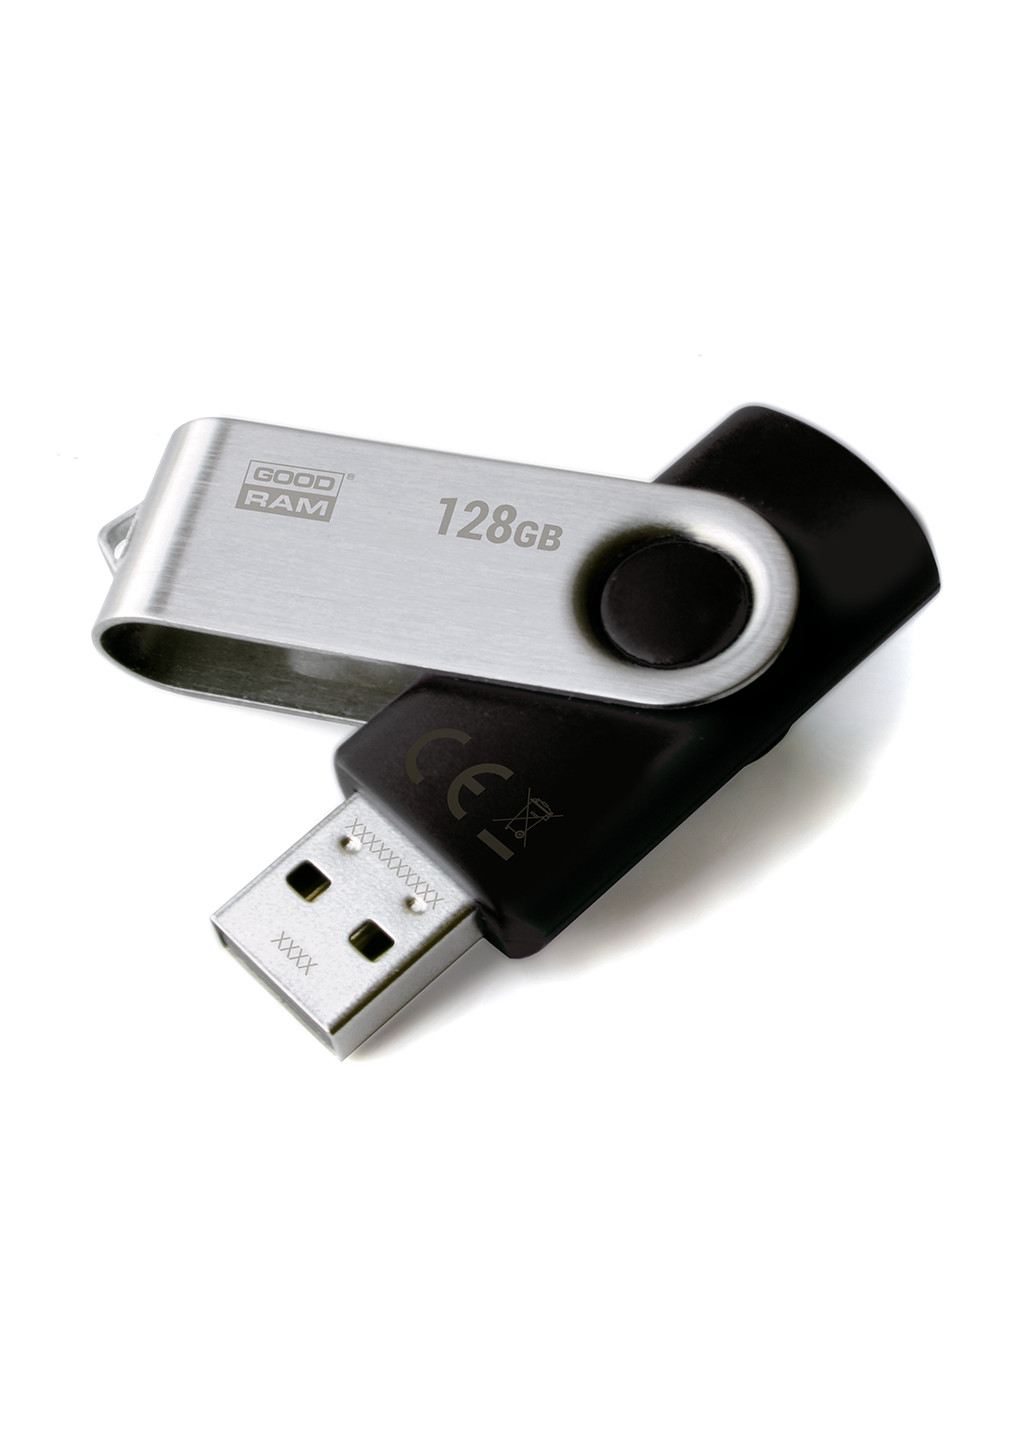 Флеш память USB Twister 128GB (UTS2-1280K0R11) Goodram флеш память usb goodram twister 128gb (uts2-1280k0r11) (135165407)